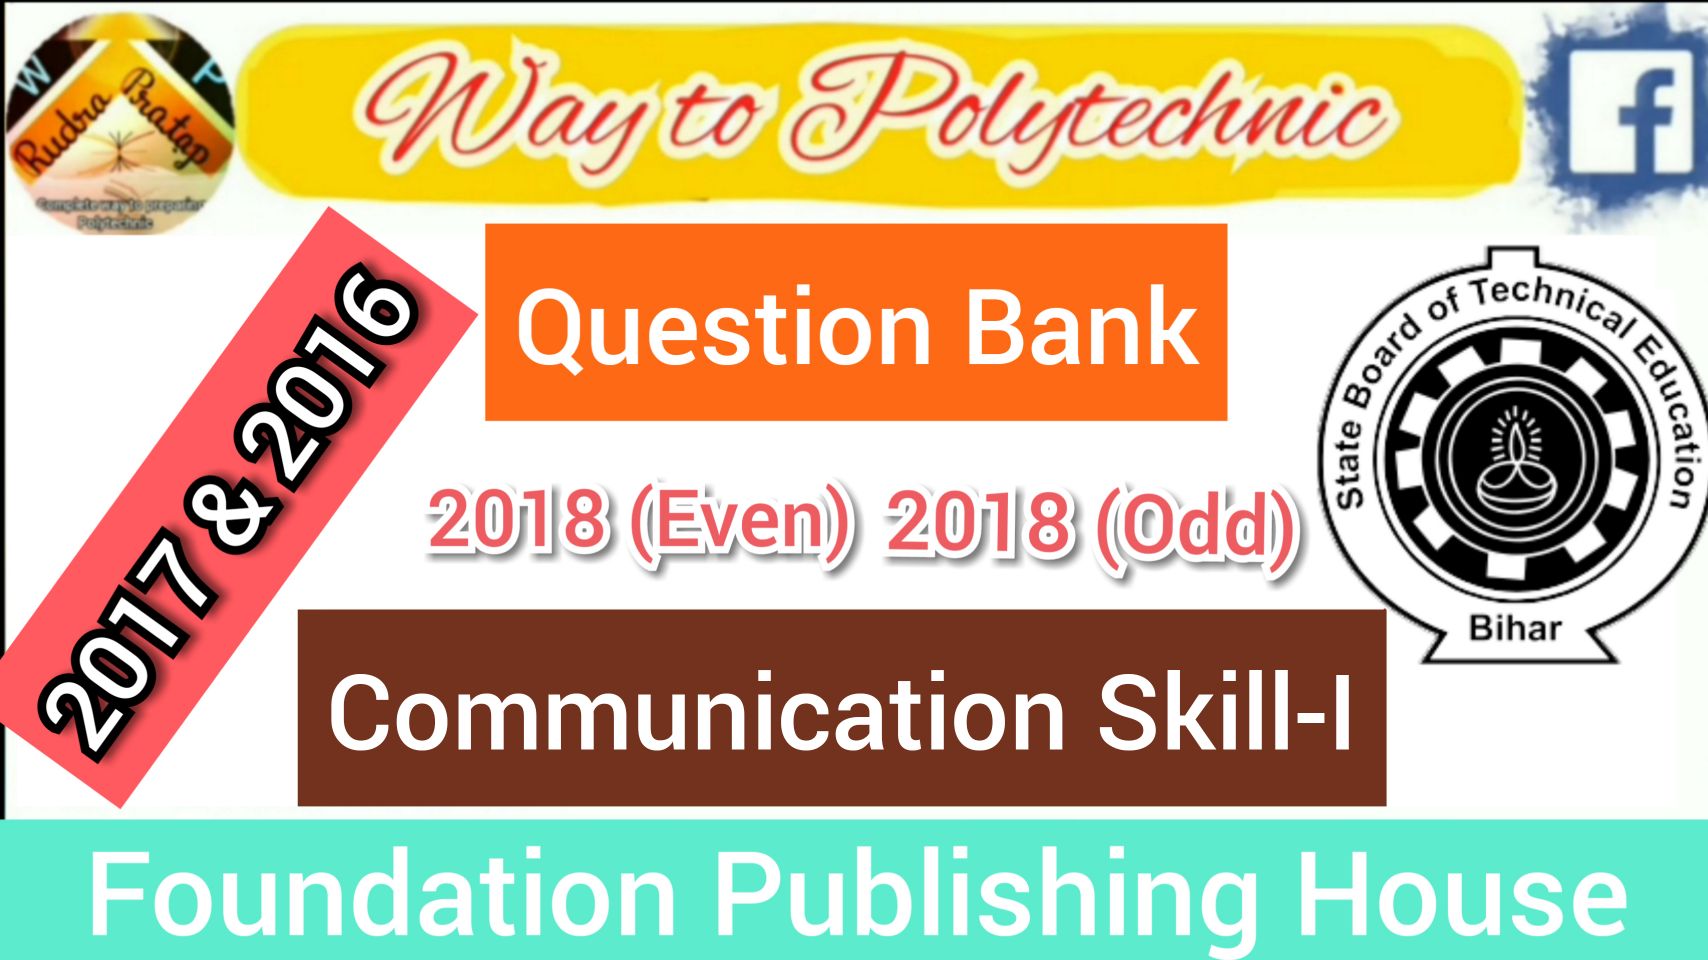 Communication Skill-I Question Bank